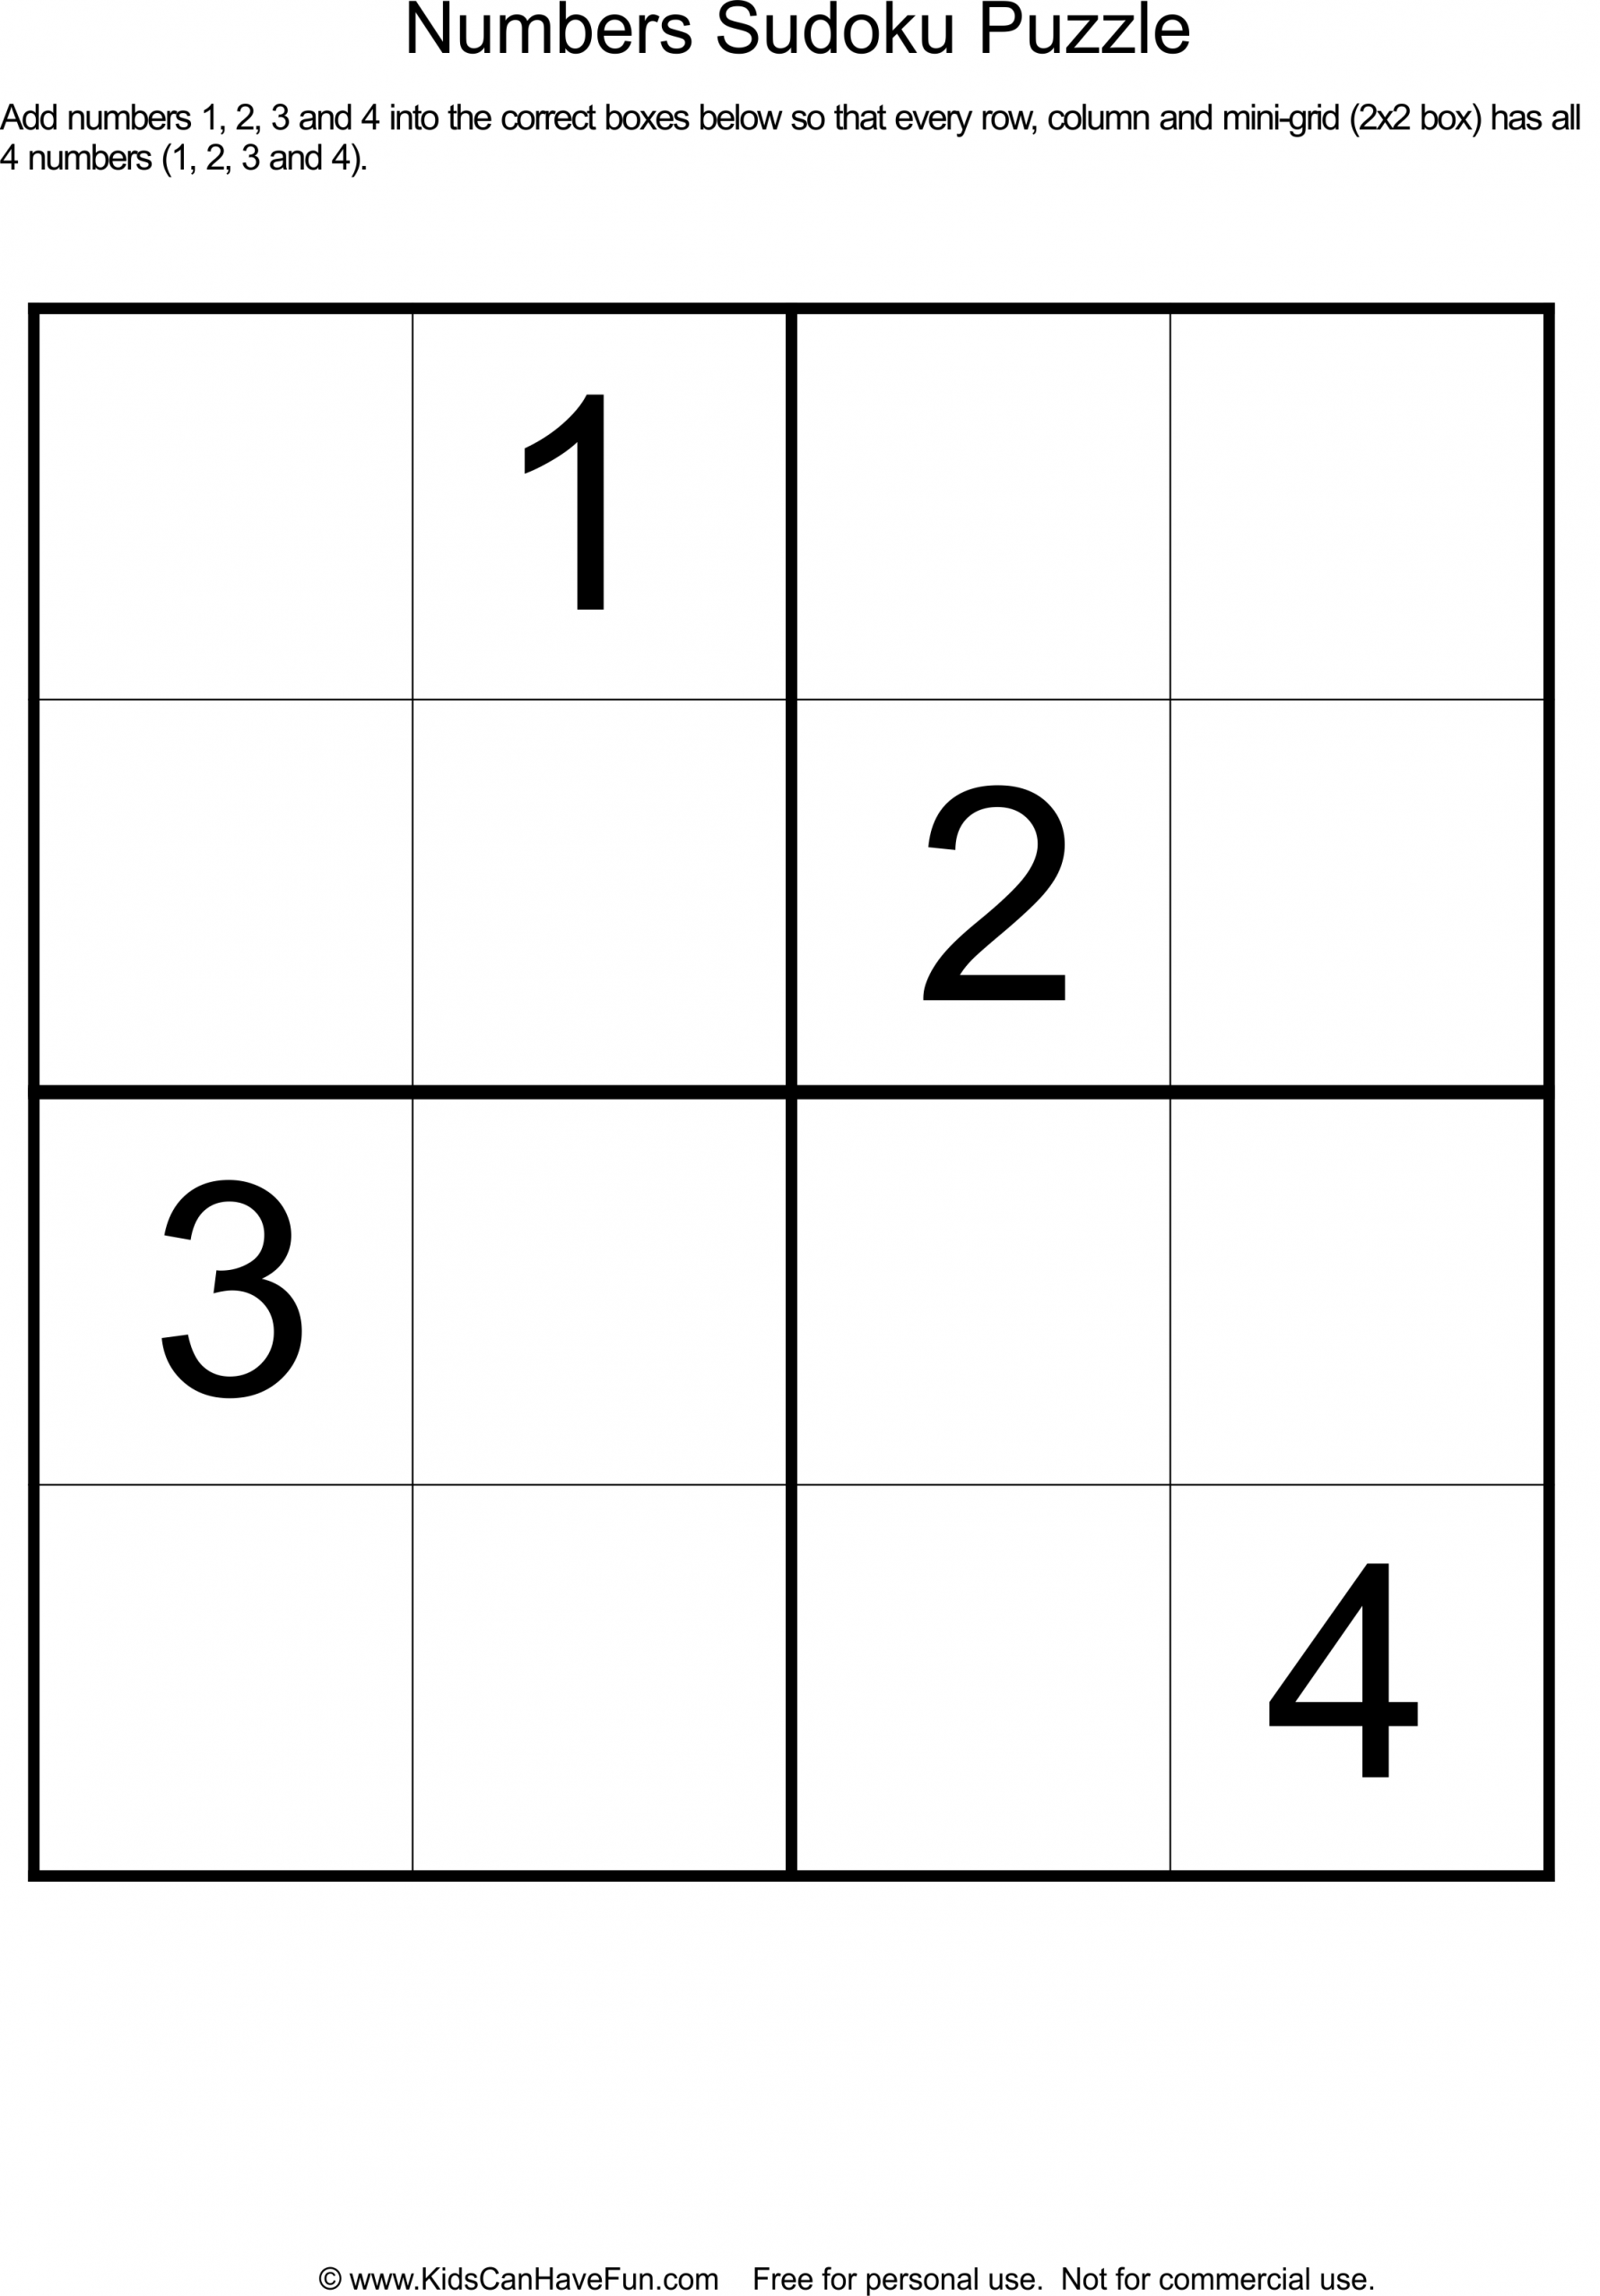 teacher-s-corner-printable-sudoku-sudoku-puzzles-printable